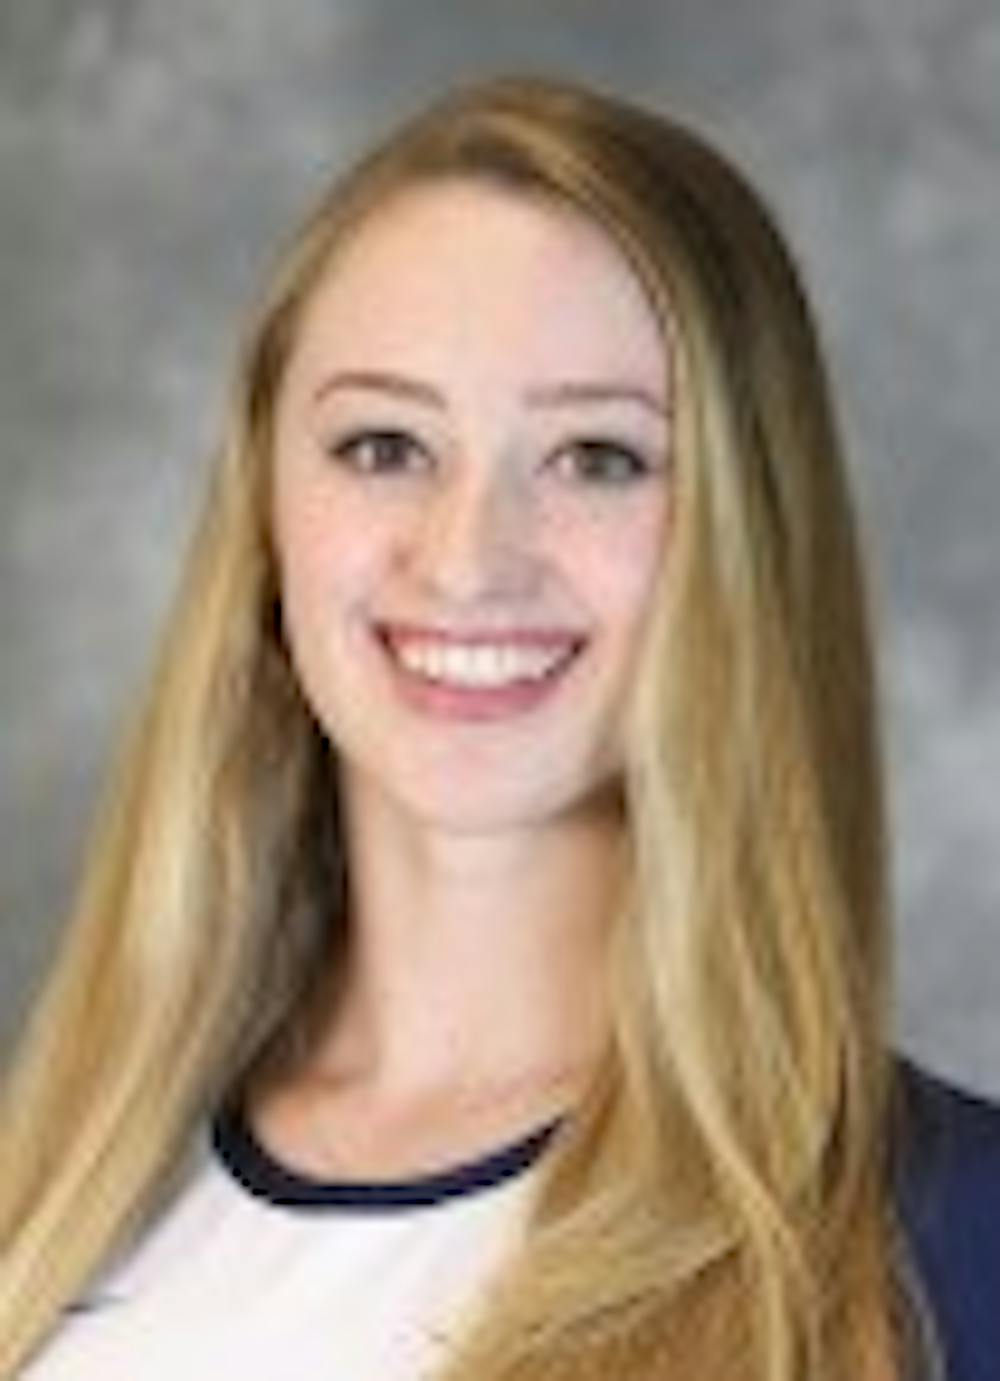 <p>Freshman setter Jennifer Wineholt has adjusted well to Virginia volleyball, according to coach Dennis Hosenshelt.</p>